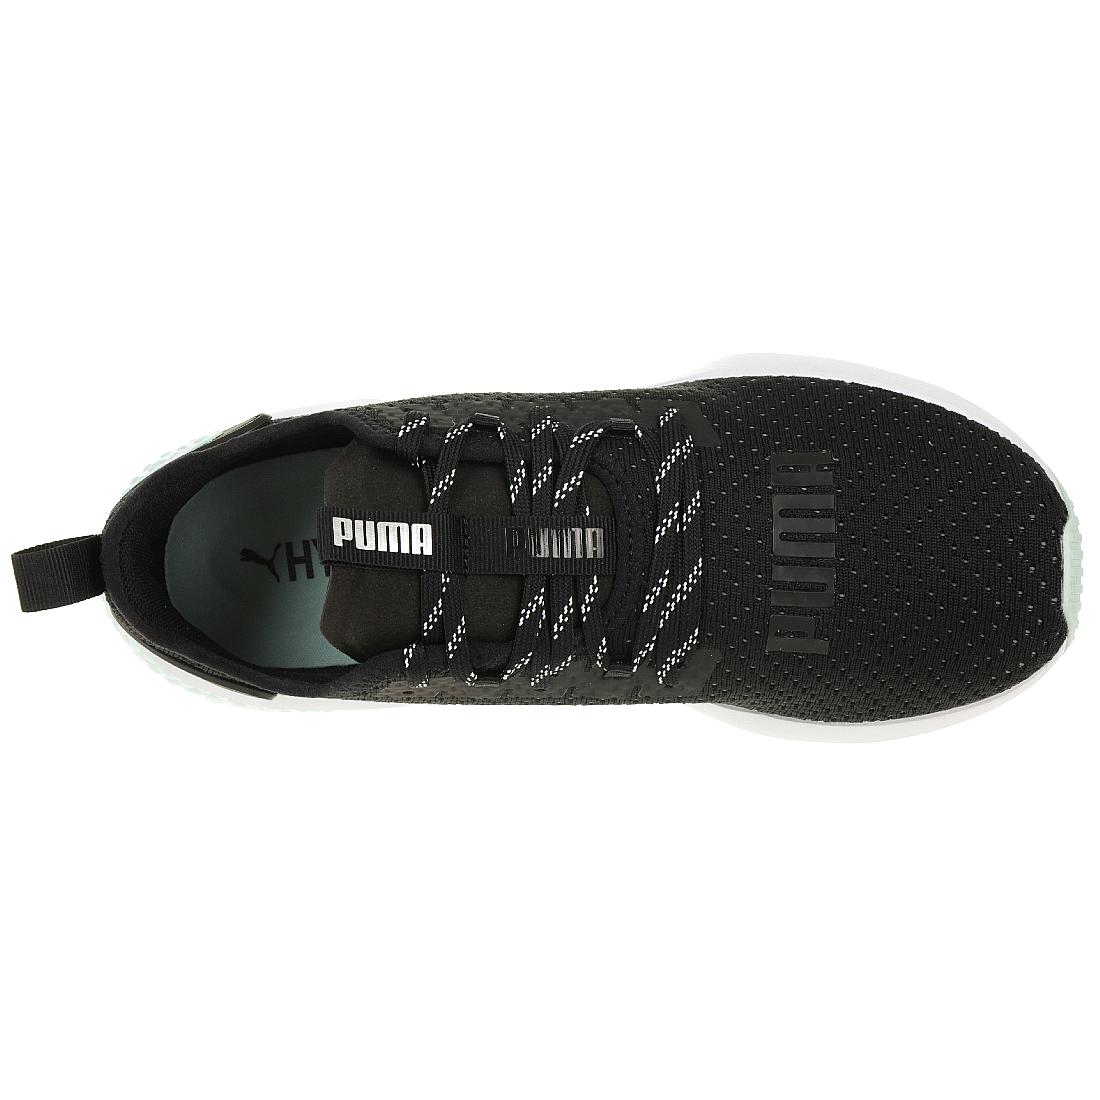 Puma Hybrid NX TZ Wn Damen Sneaker Laufschuh Fitness schwarz 192363 01